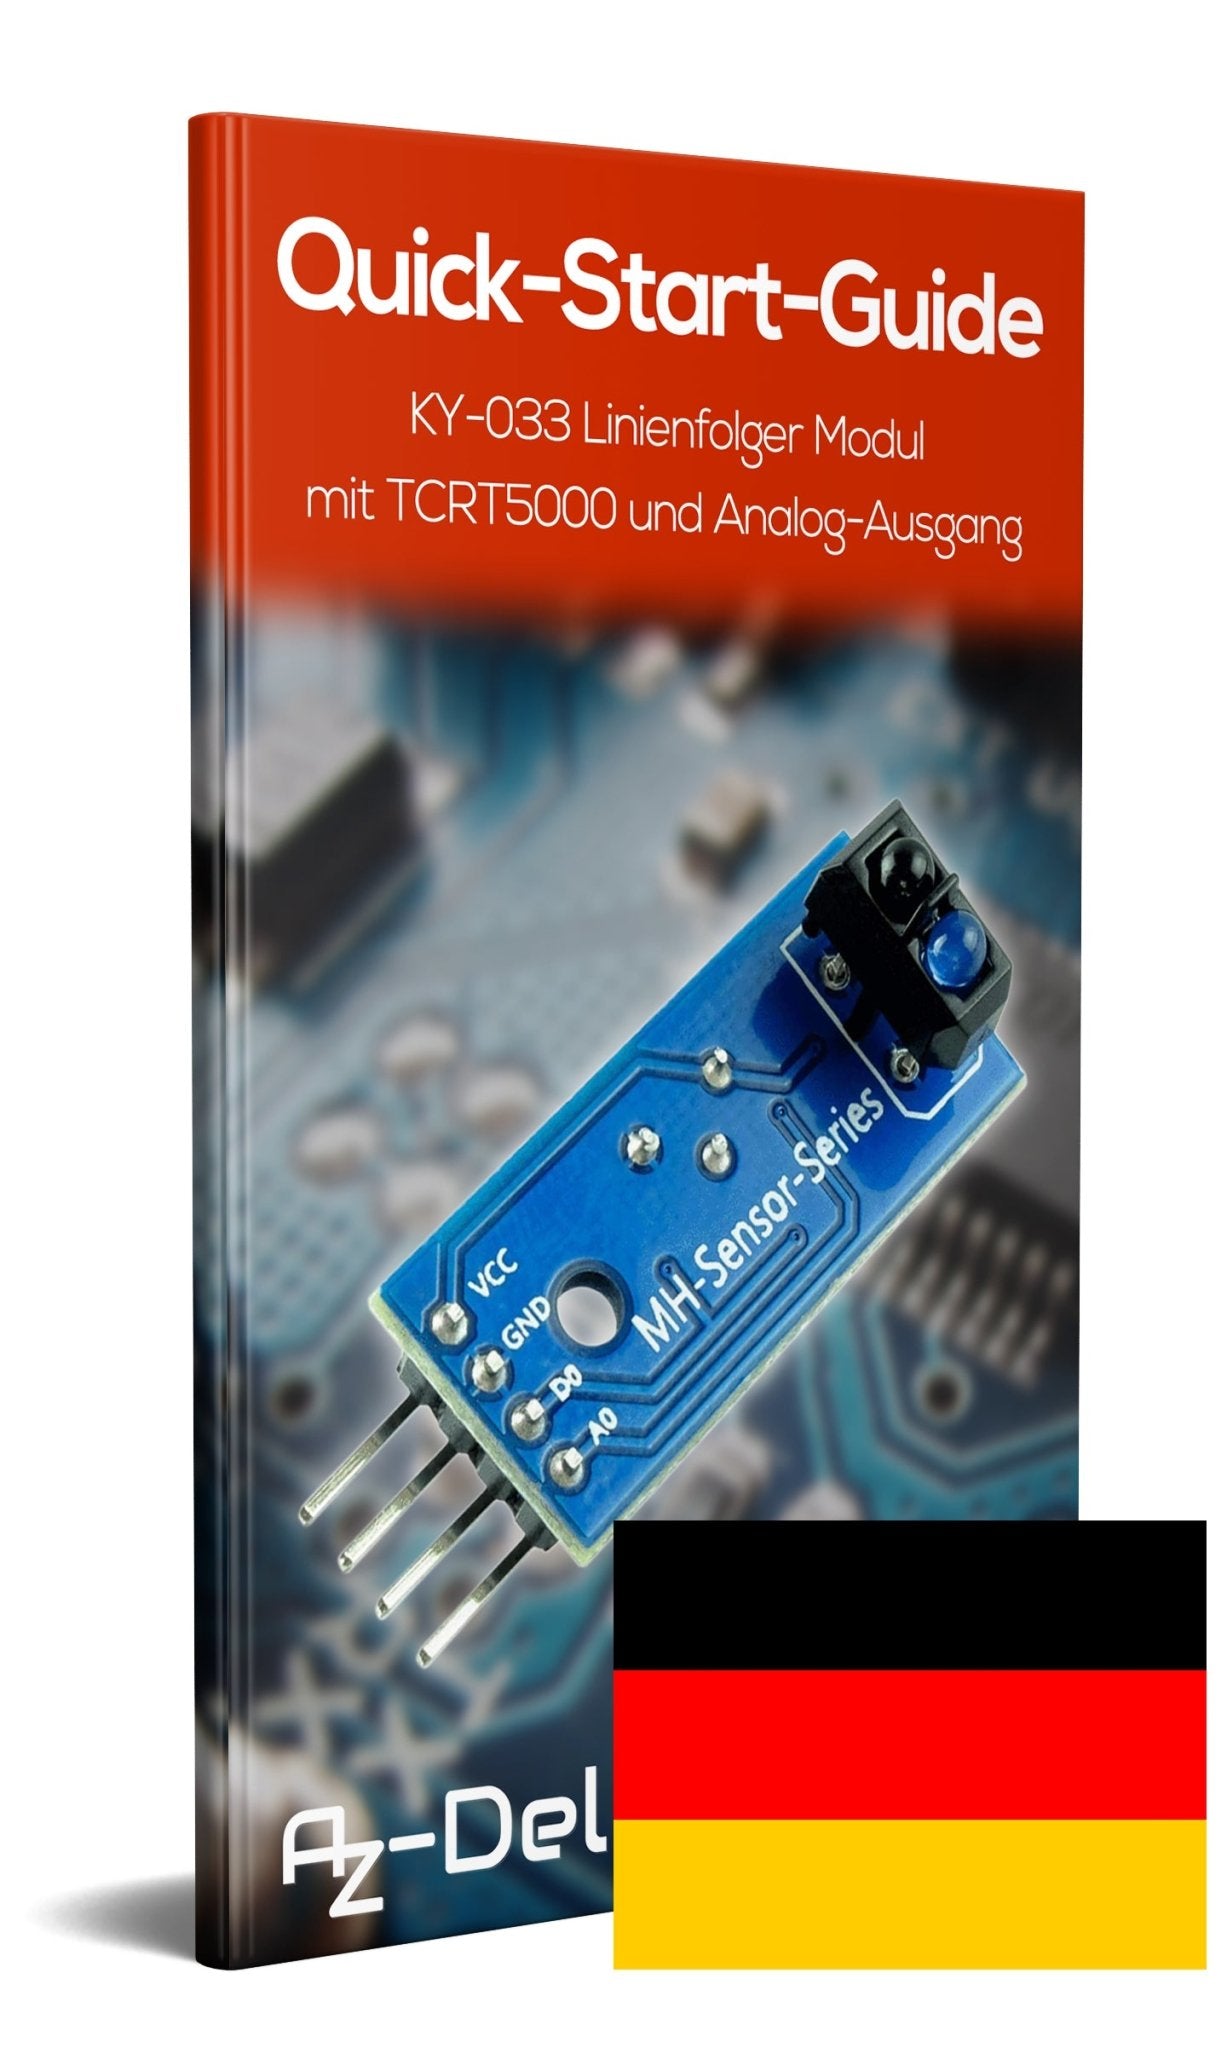 KY-033 Linienfolger Modul mit TCRT5000 und Analog-Ausgang - AZ-Delivery